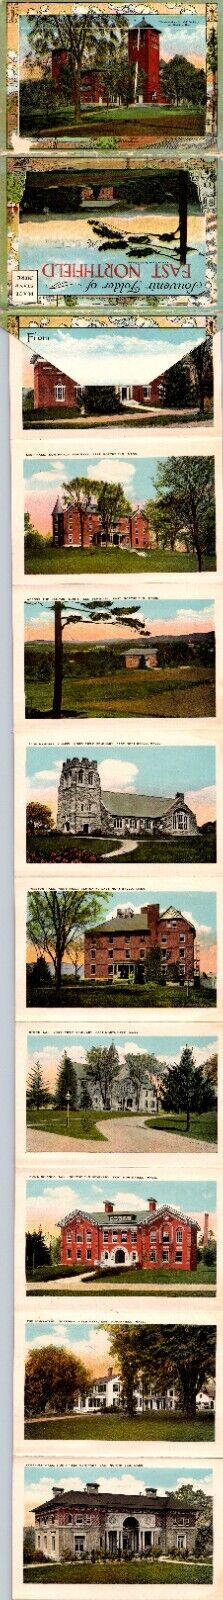 Postcard MA East Northfield Town Views Souvenir Folder c1920s 18 Views AE26